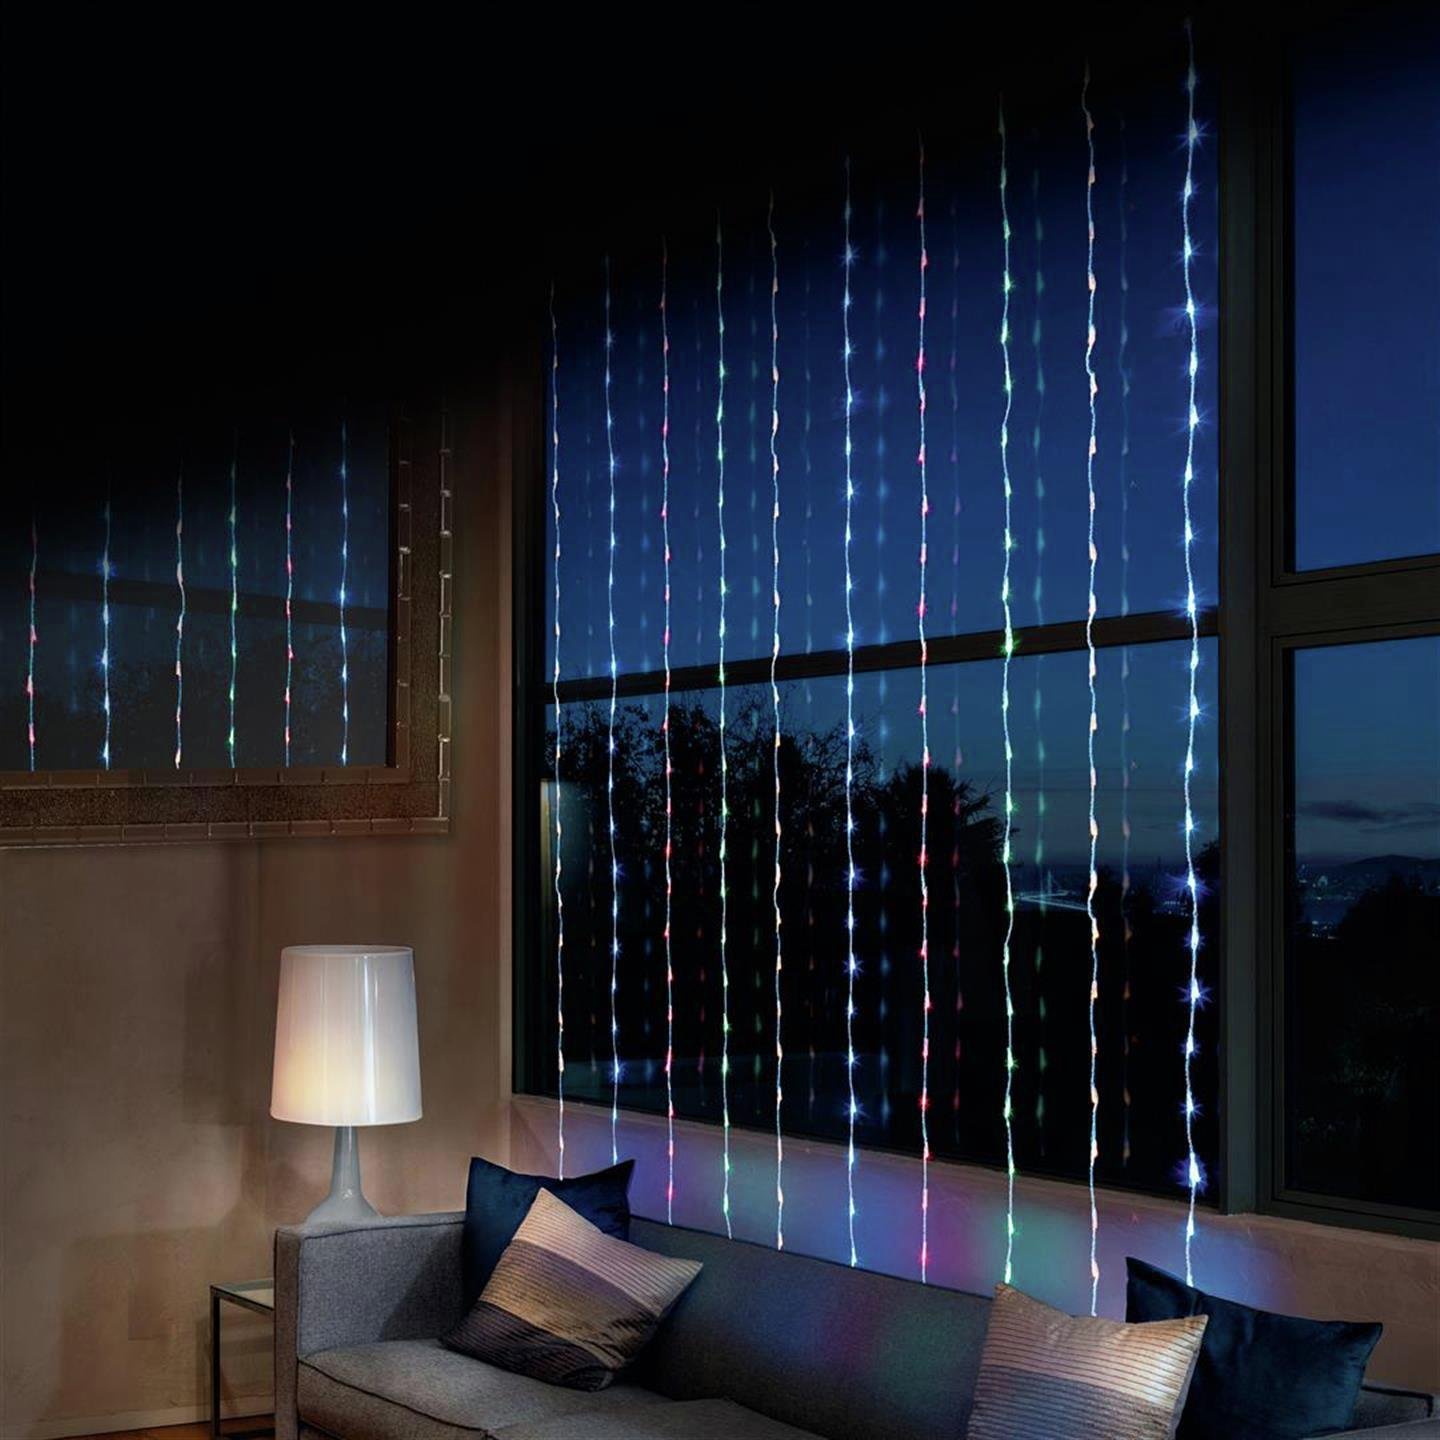 Premier Decorations 10m LED Waterfall Curtain Light - Multi